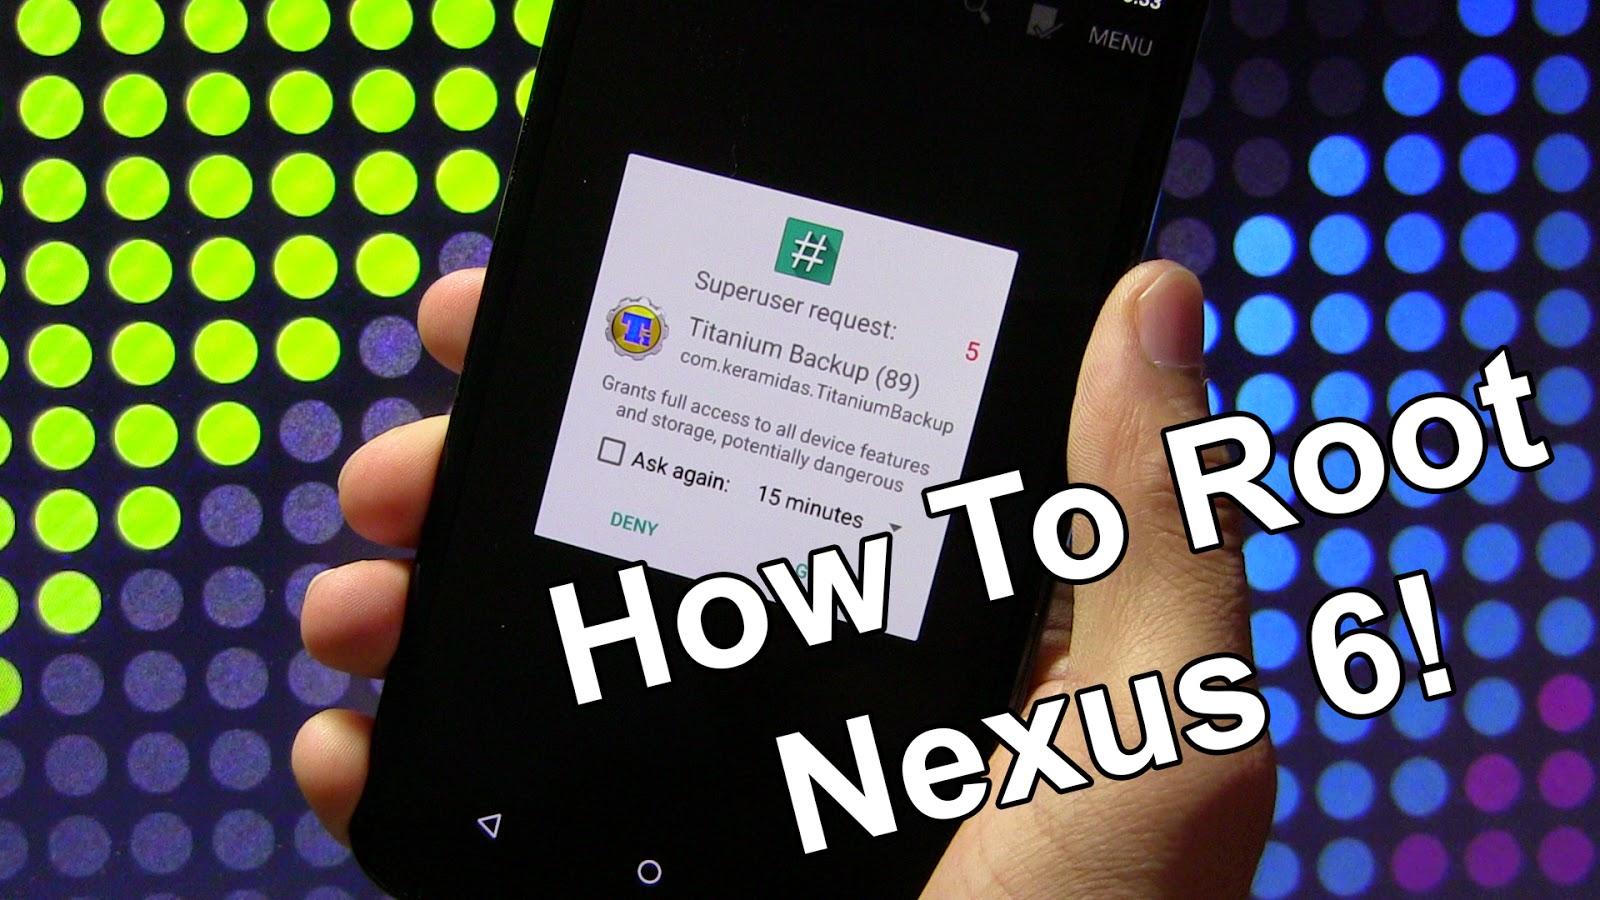 Nexus 6 One Click Root twrp factory Reset Toolkit For Mac